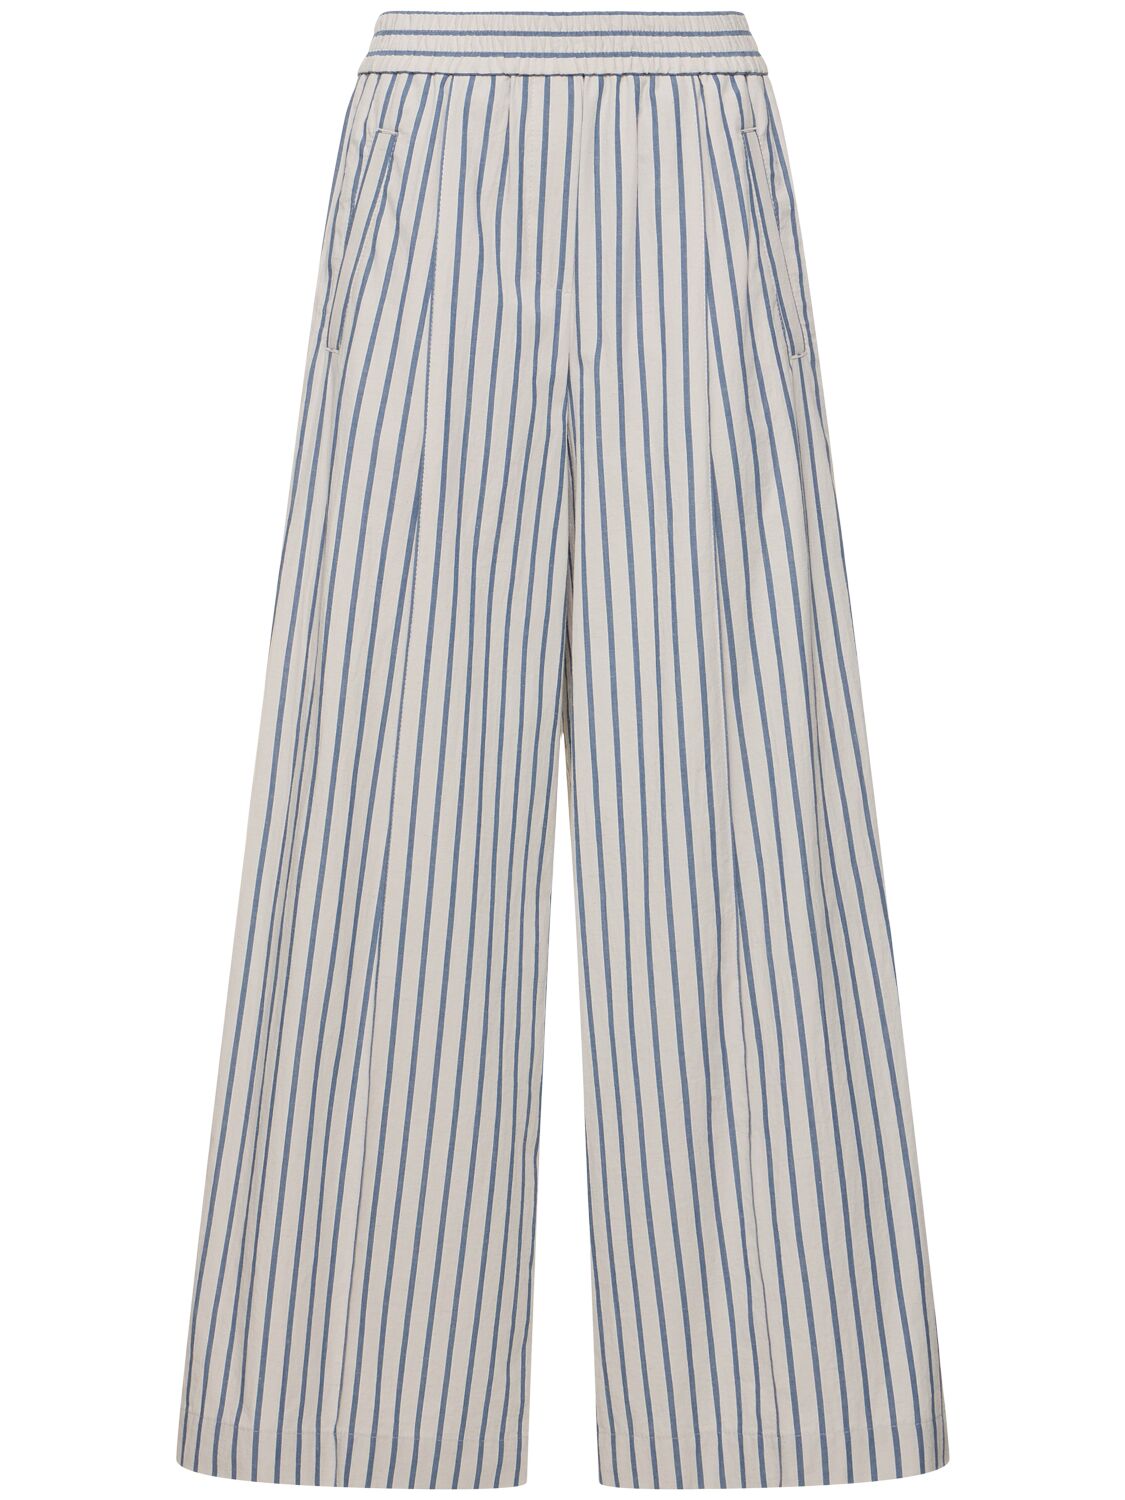 Image of Striped Cotton Poplin Wide Pants